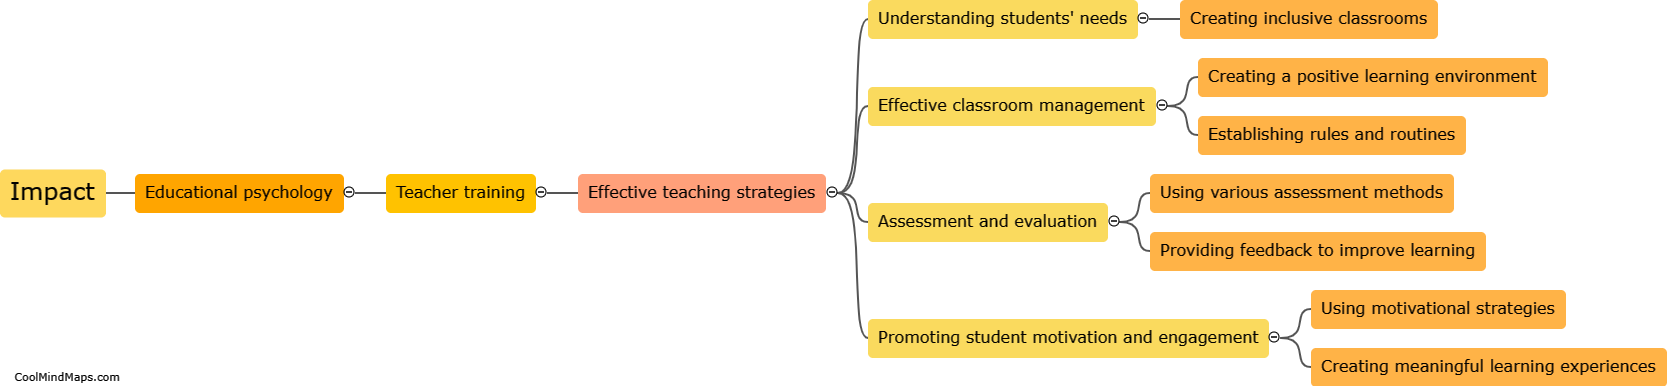 How does educational psychology impact teacher training?